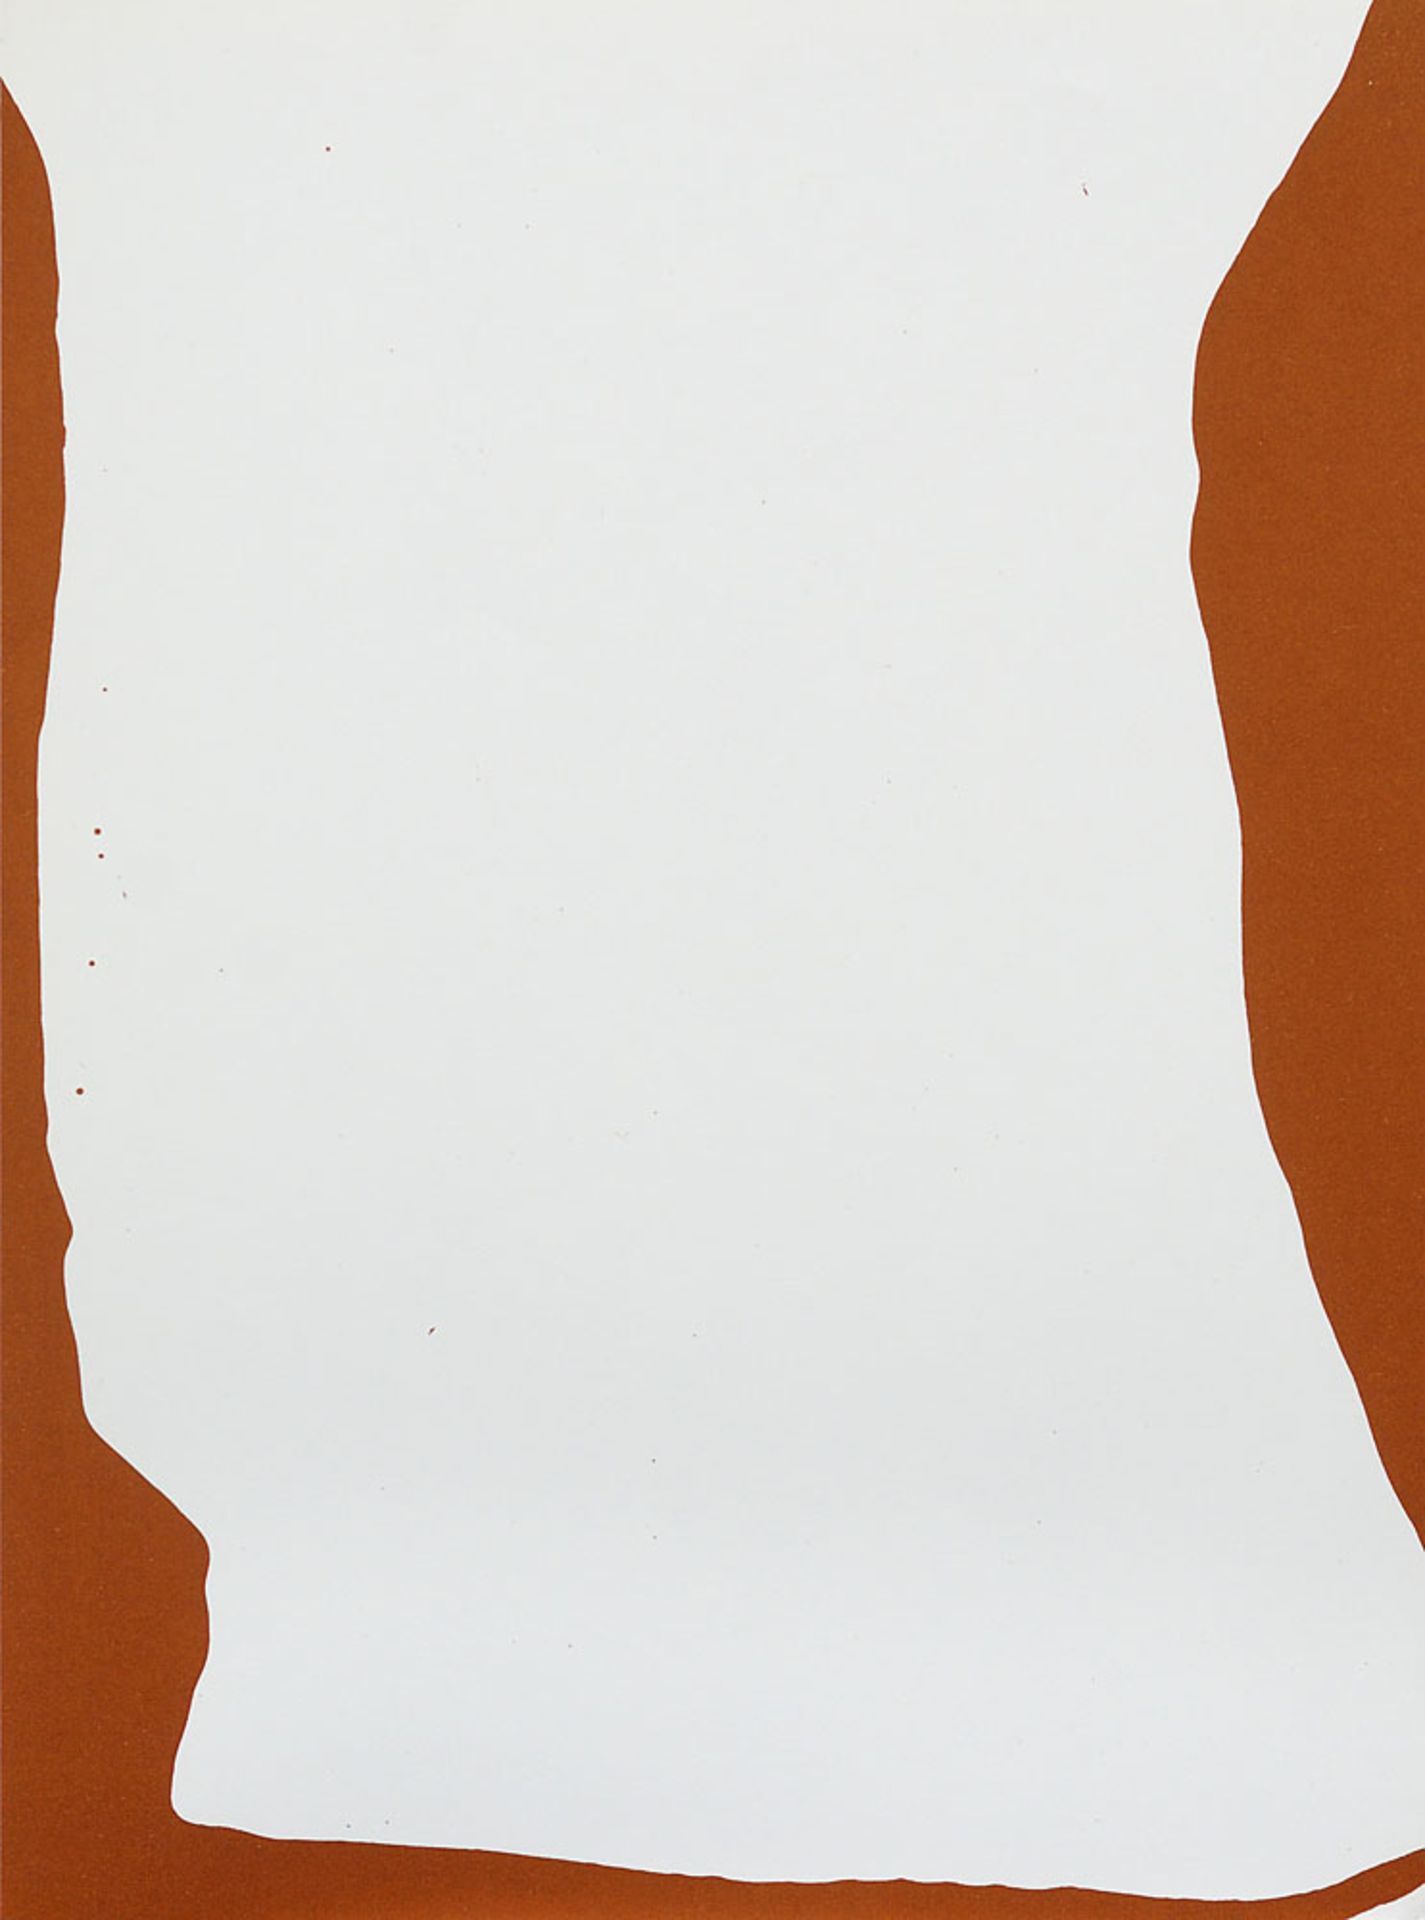 049 - - Helen Frankenthaler.